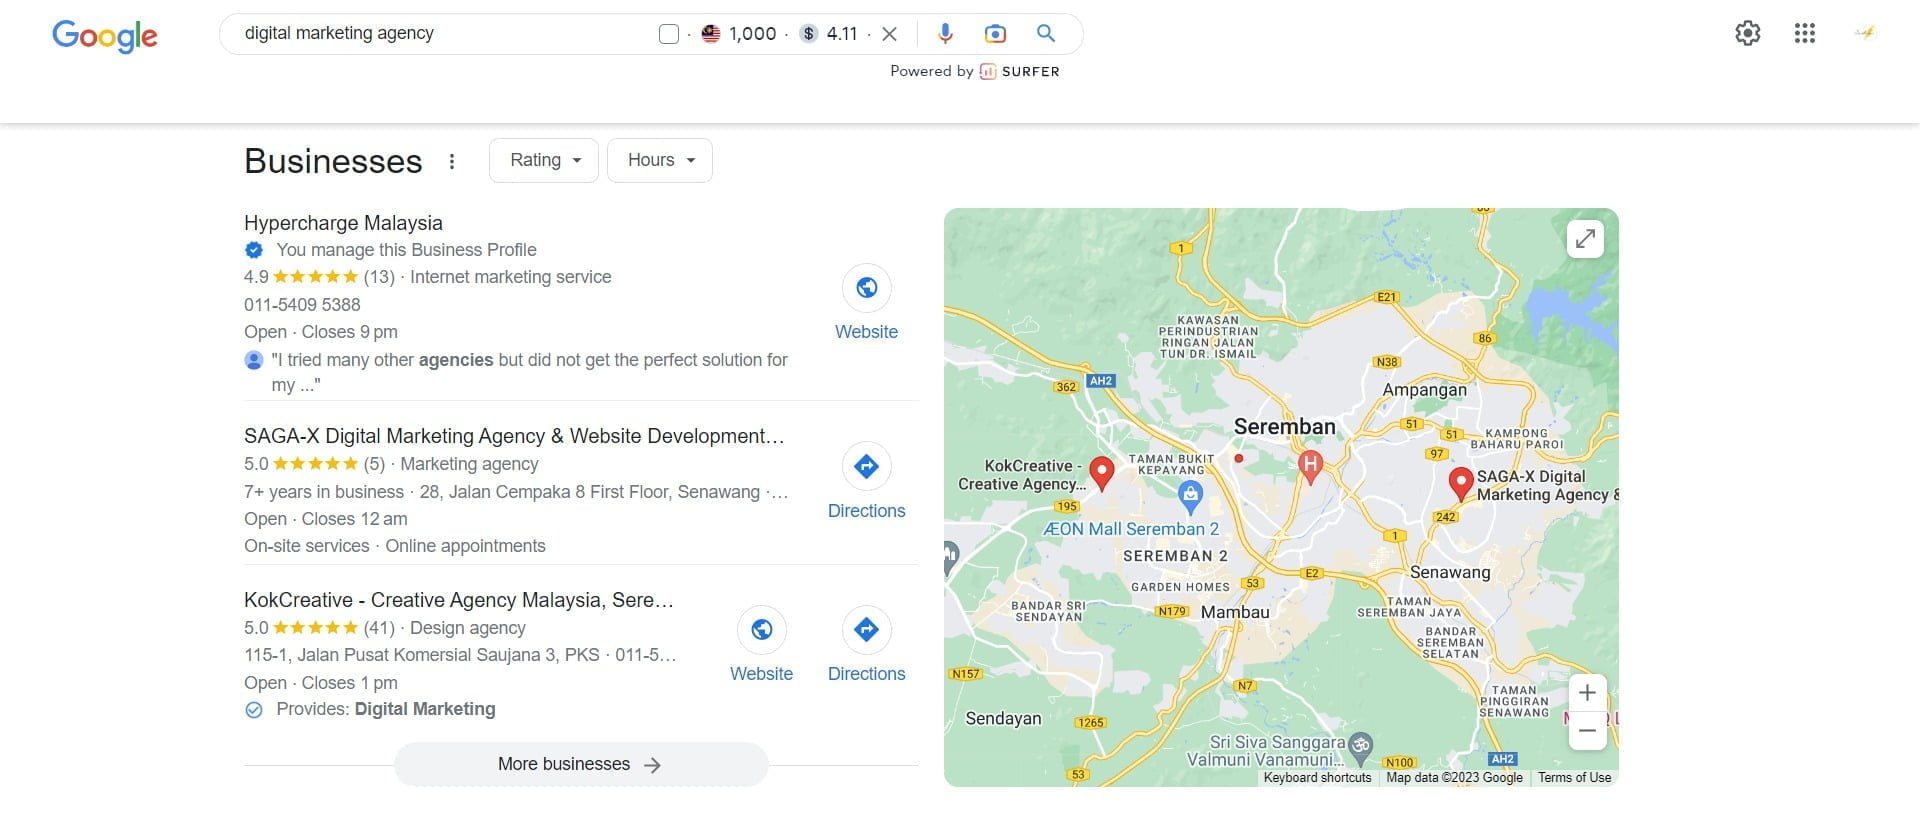 google maps google business profile of digital marketing agency